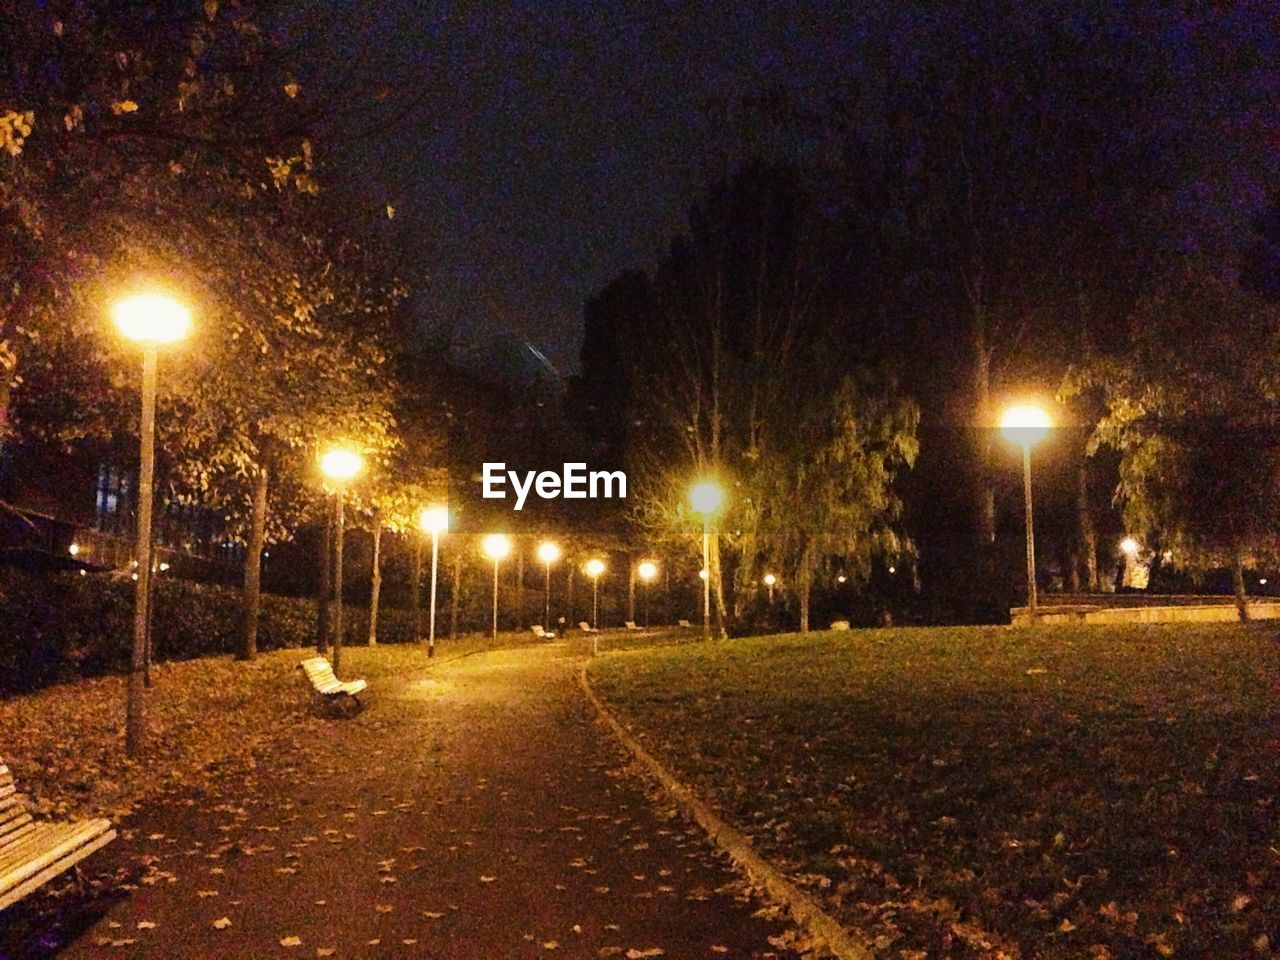 Empty park bench on illuminated walkway at night